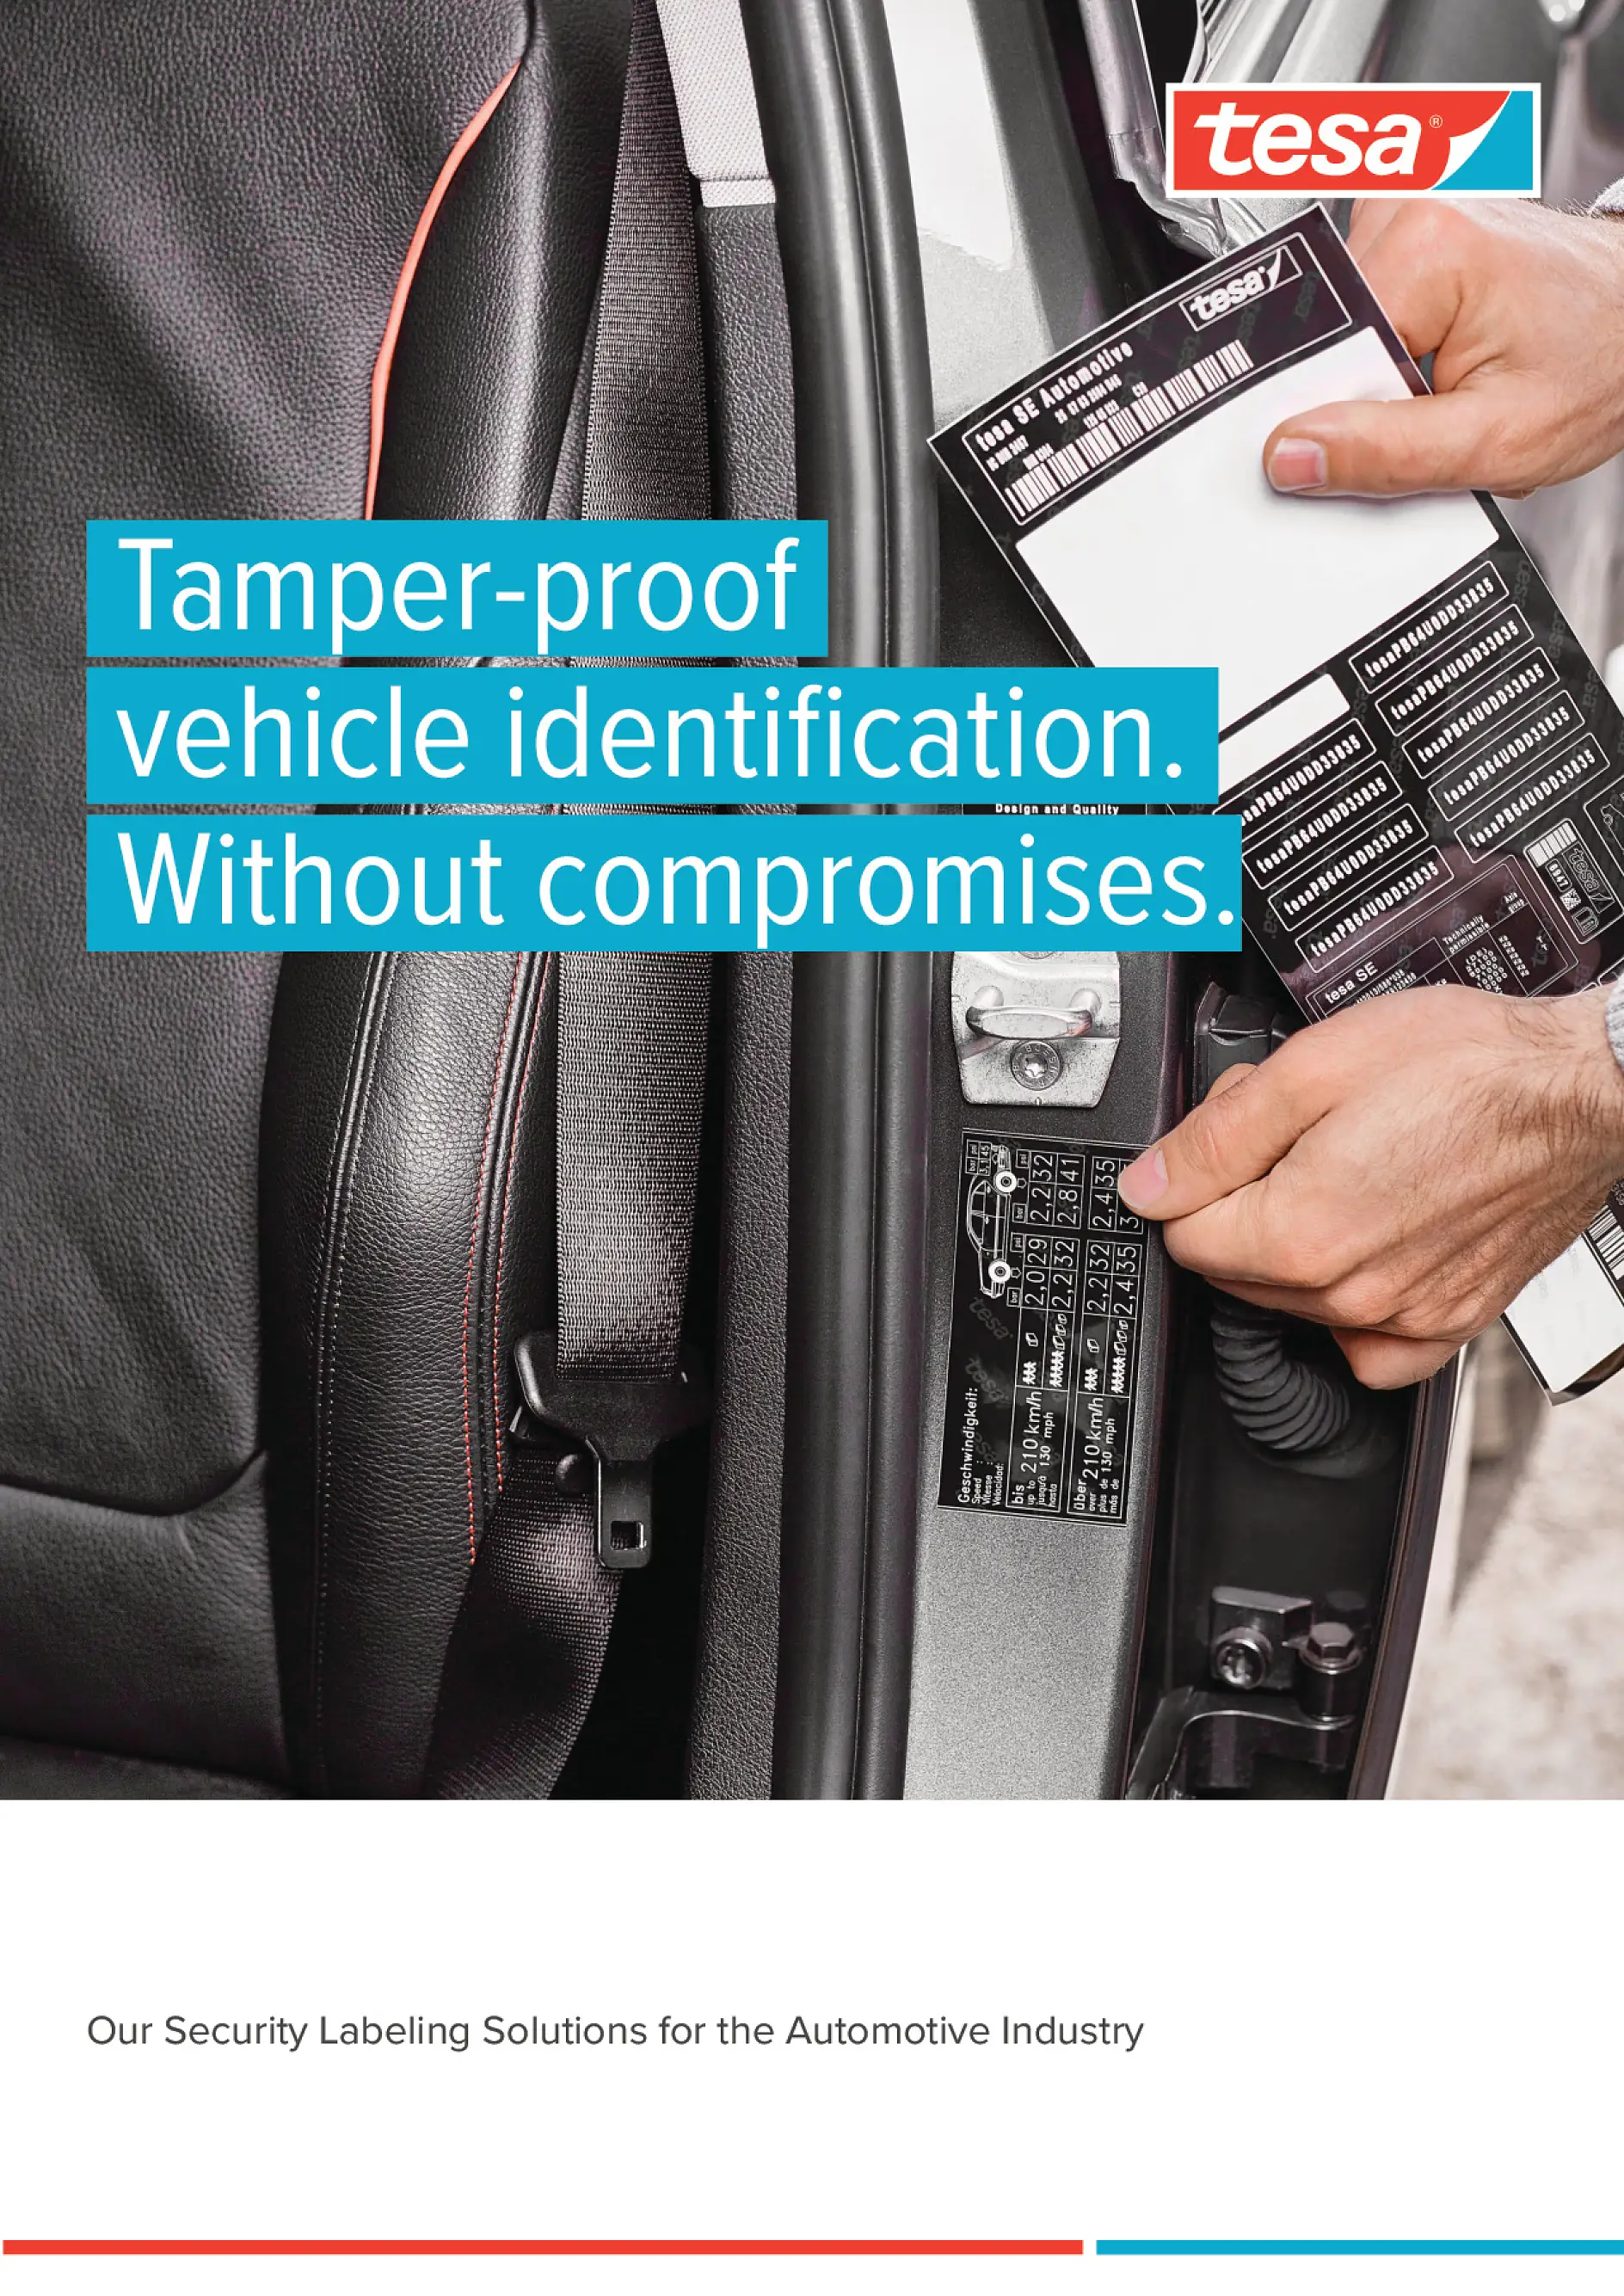 Tamper-proof vehicle identification